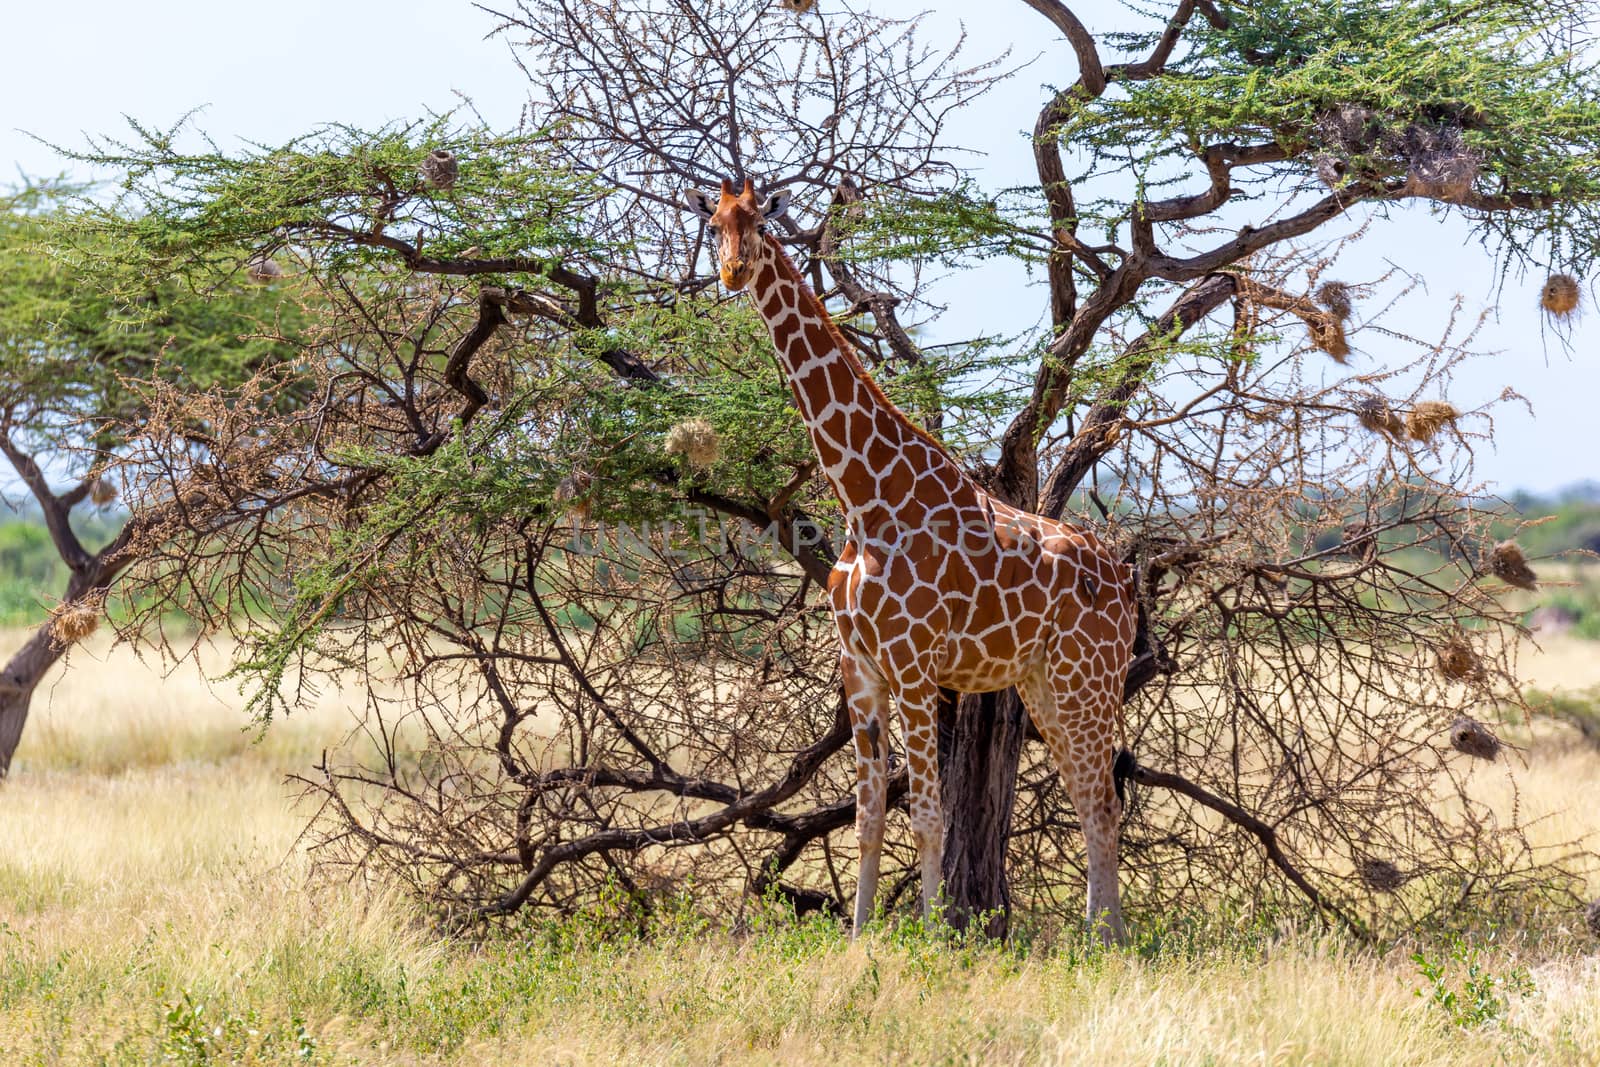 Somalia giraffes eat the leaves of acacia trees by 25ehaag6